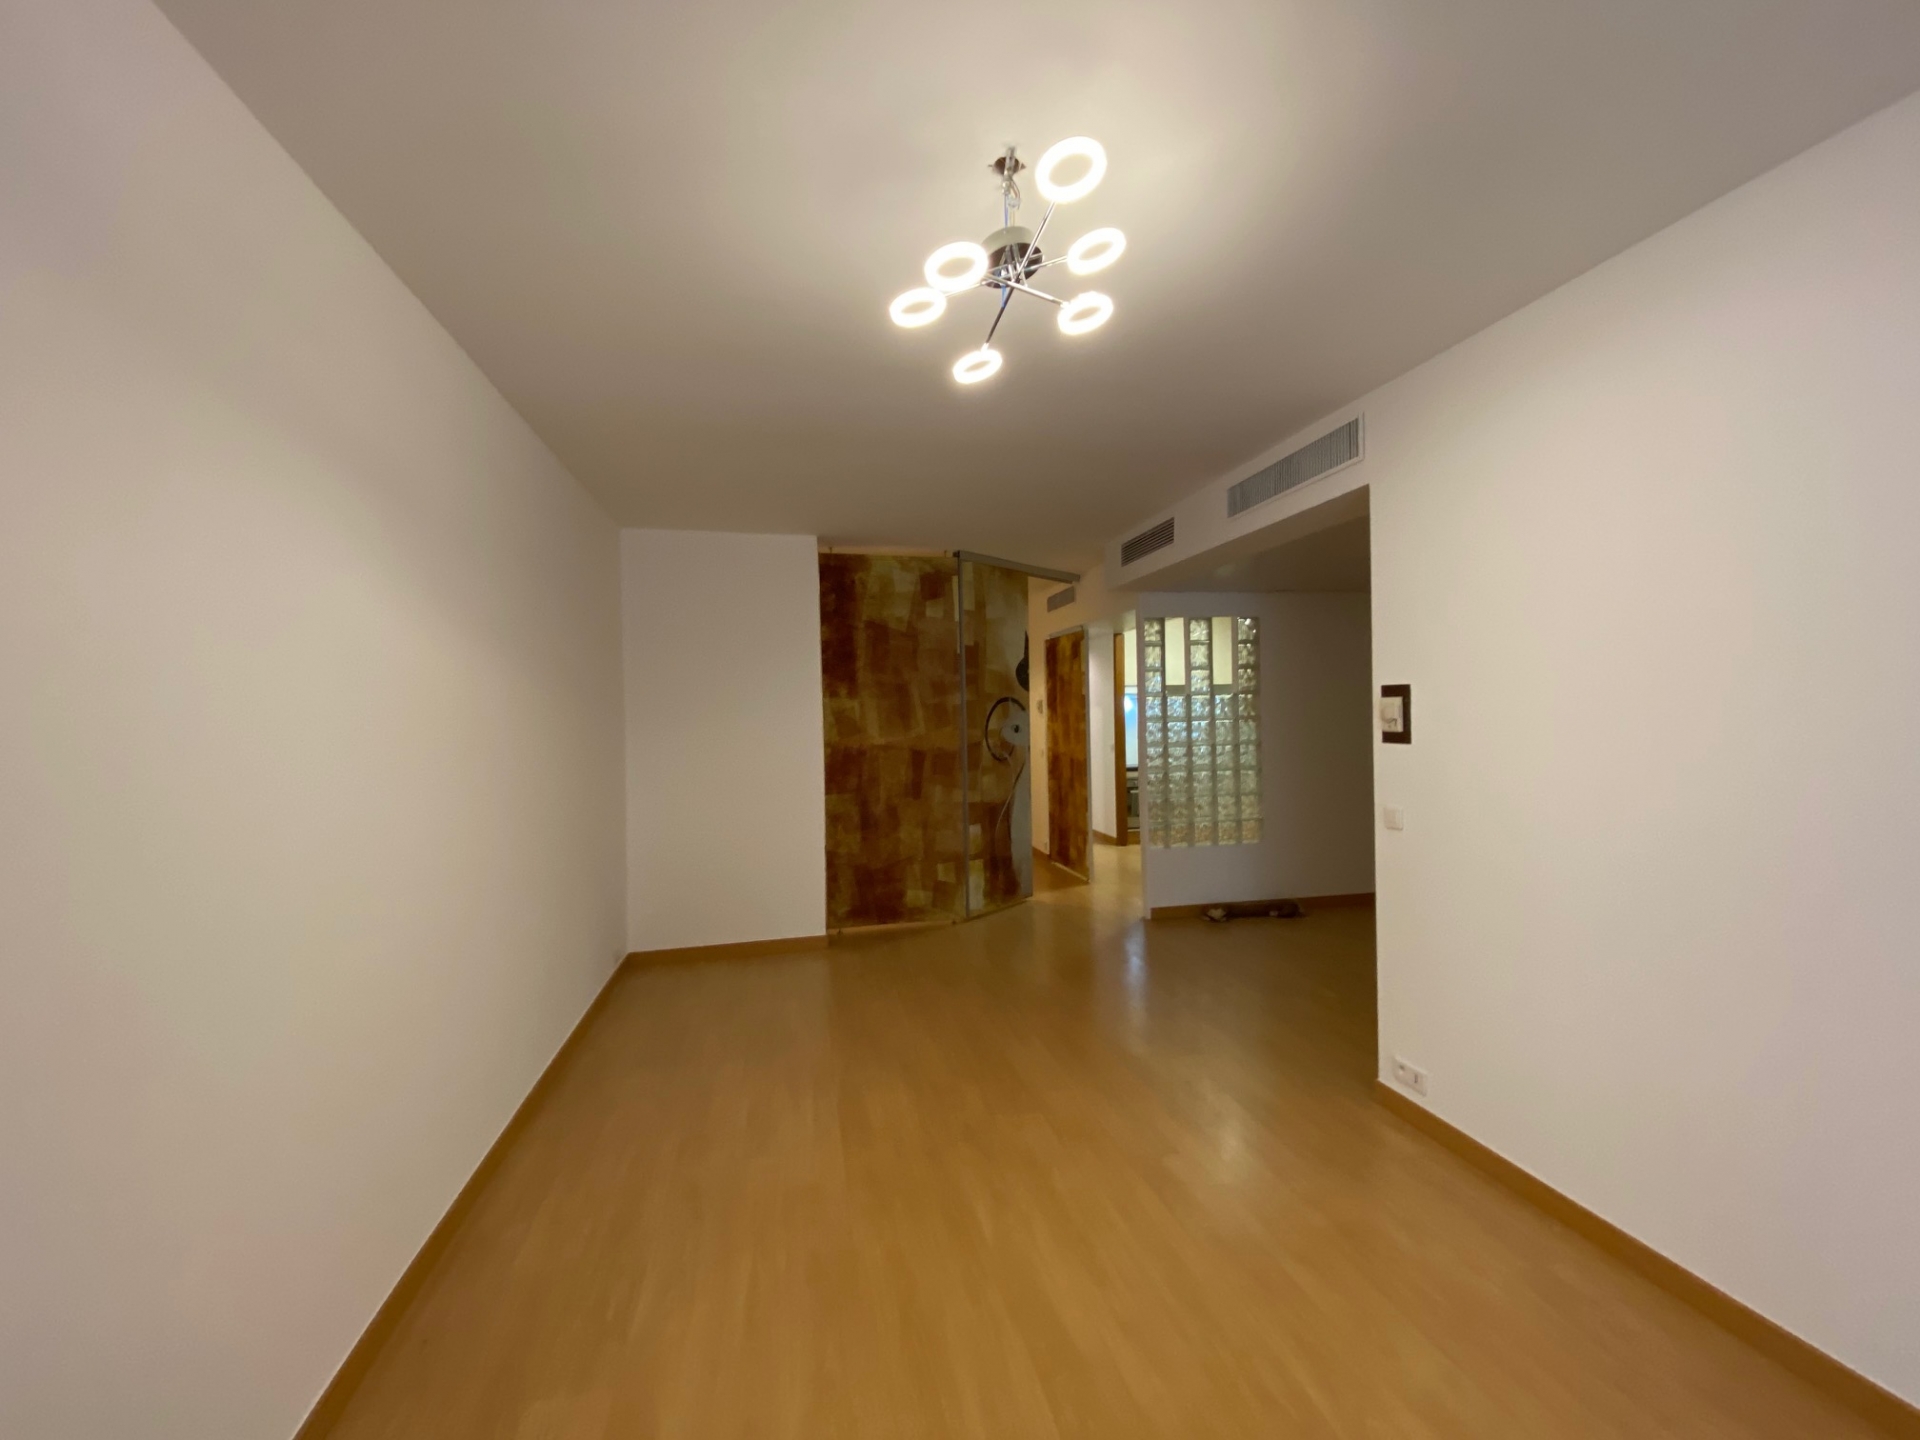 Dotta Appartement de 4 pieces a vendre - VALLESPIR - Larvotto - Monaco - img8177